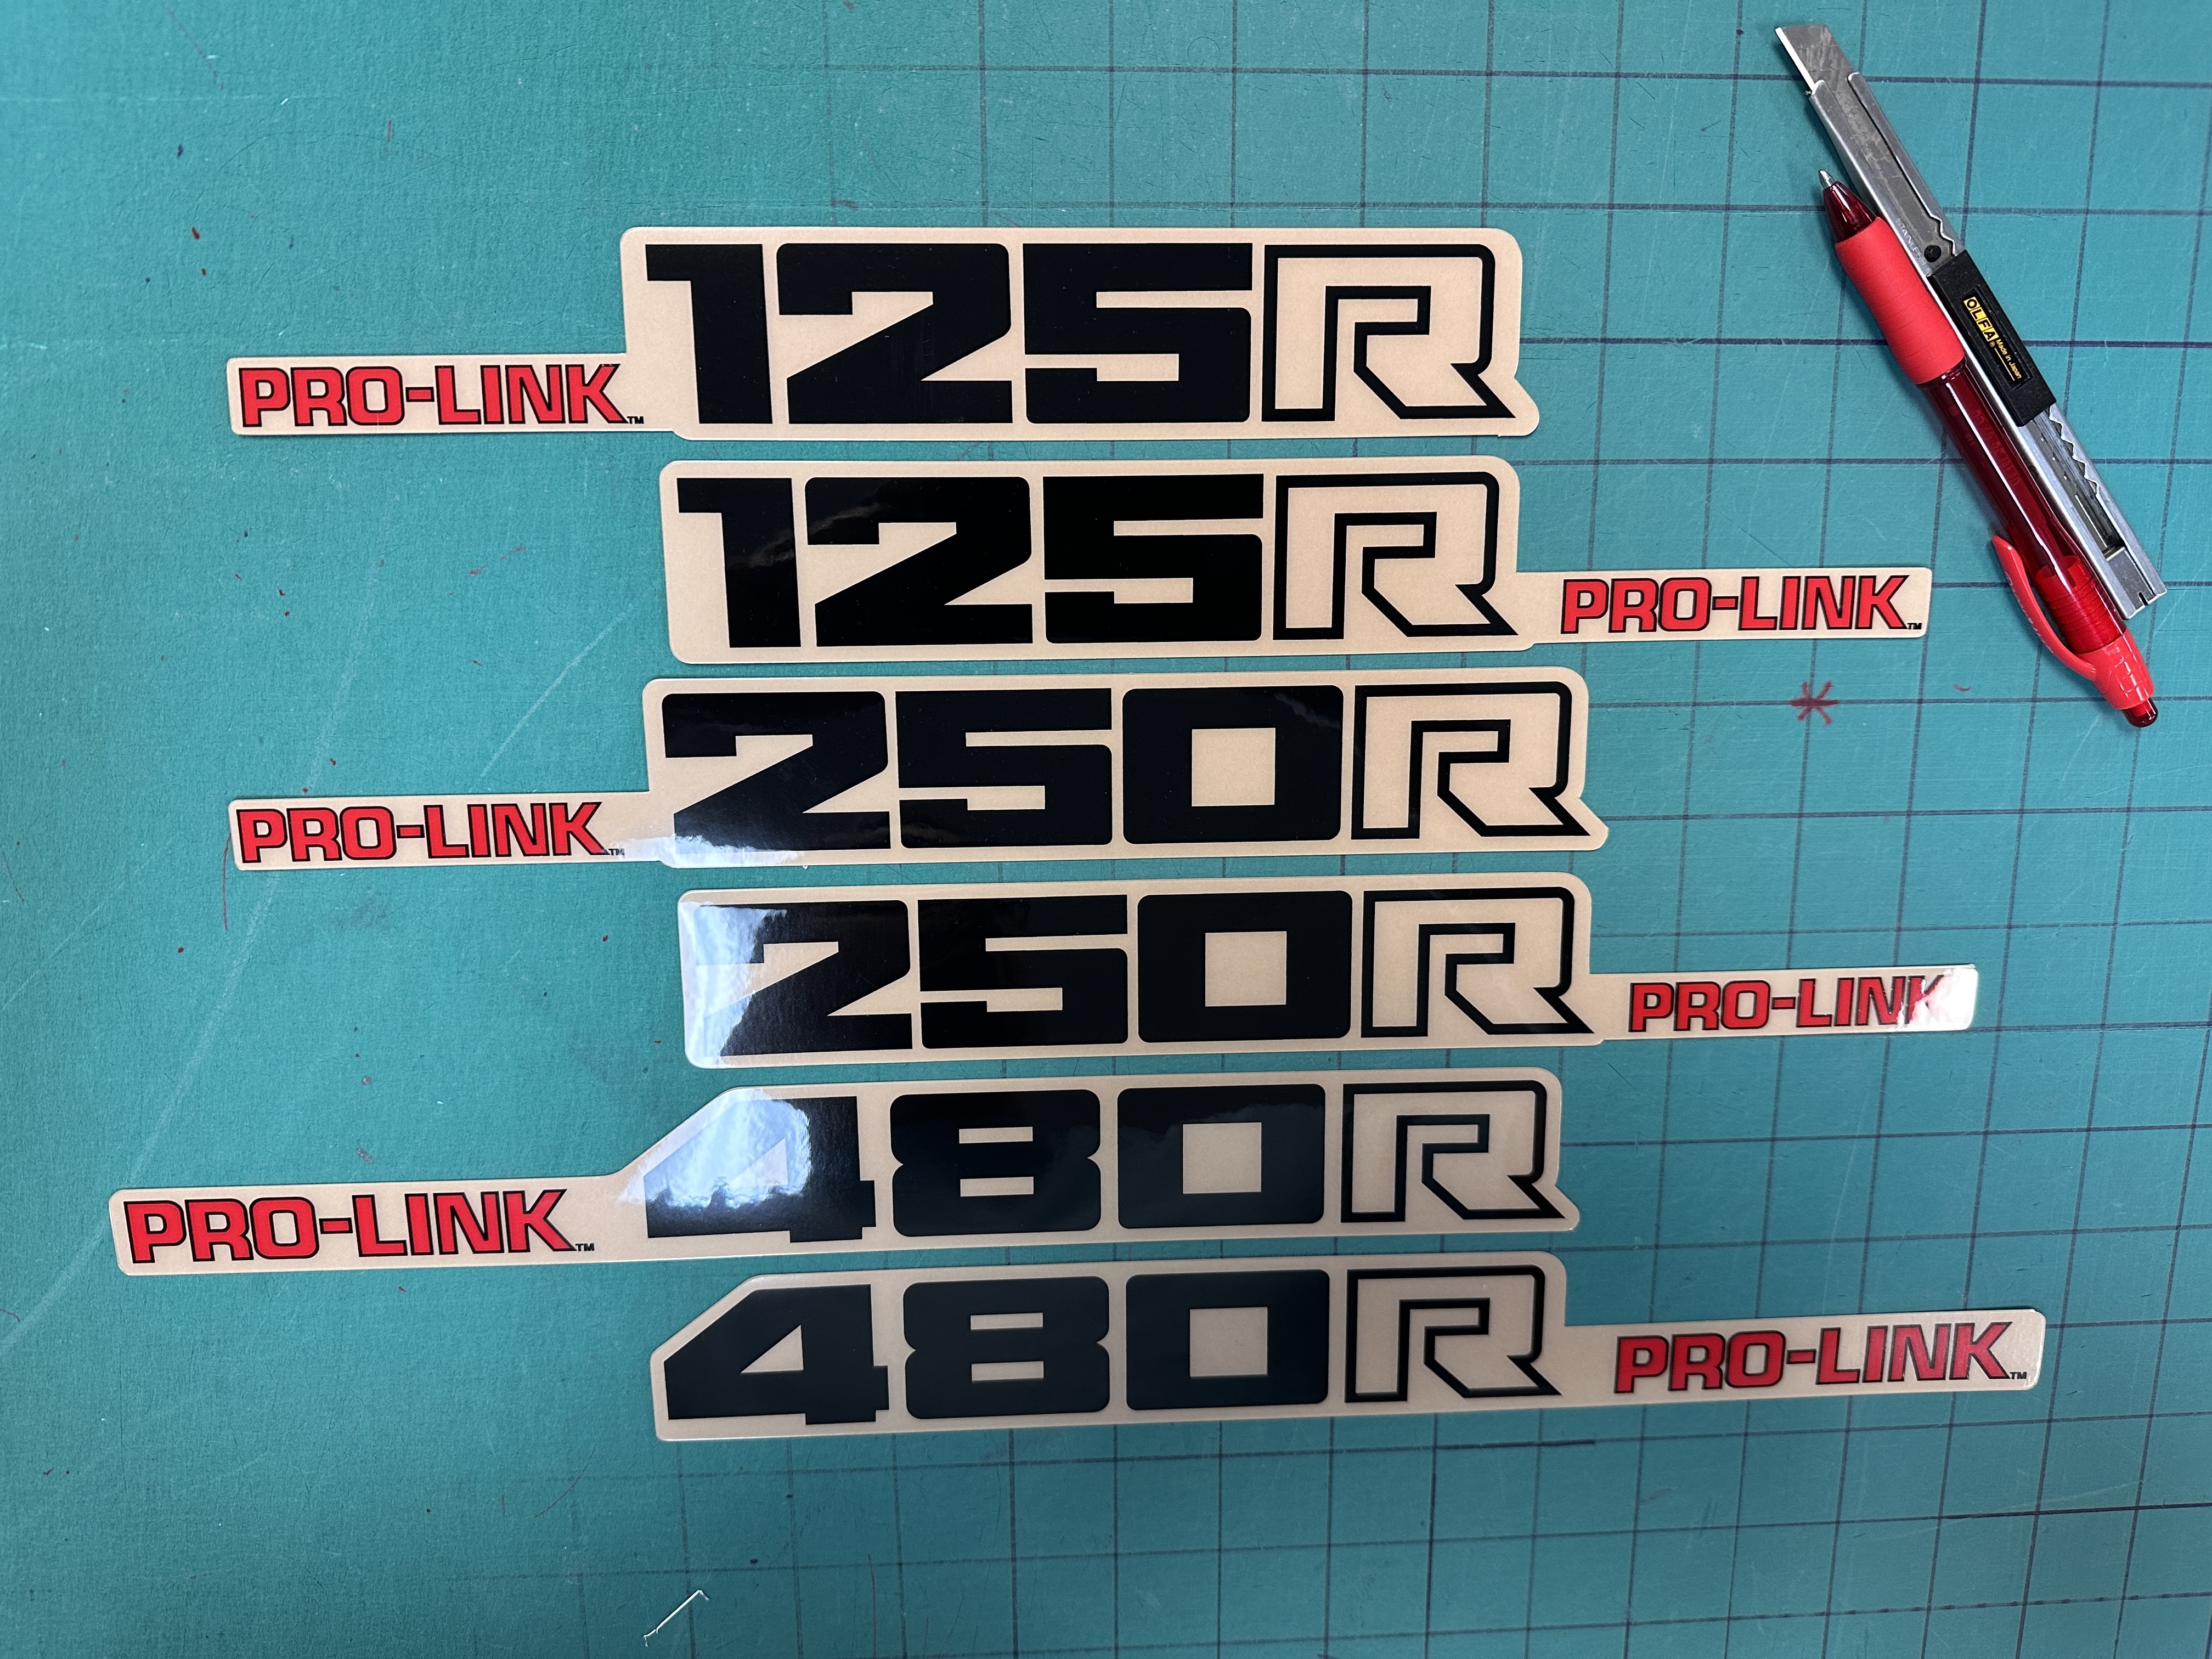 Sticker Pro-link for Honda XLR 85 ( Idem: 87121MG2700)